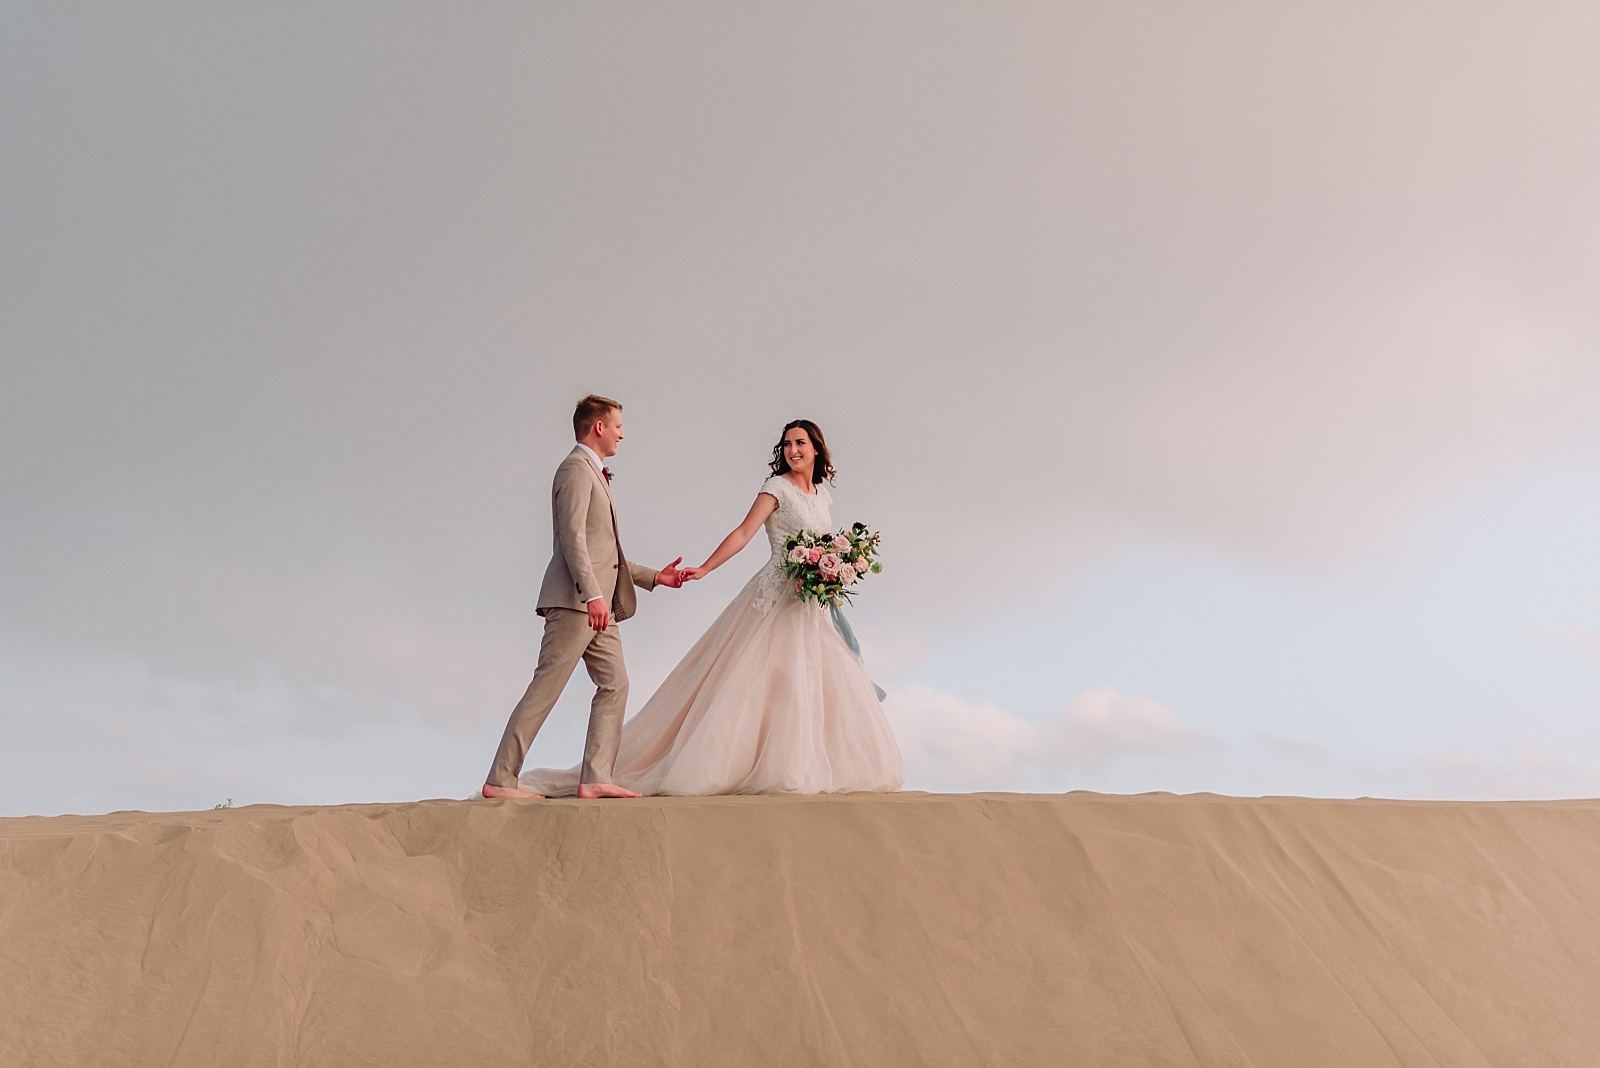 bride and groom walking in sand dunes celebrating wedding